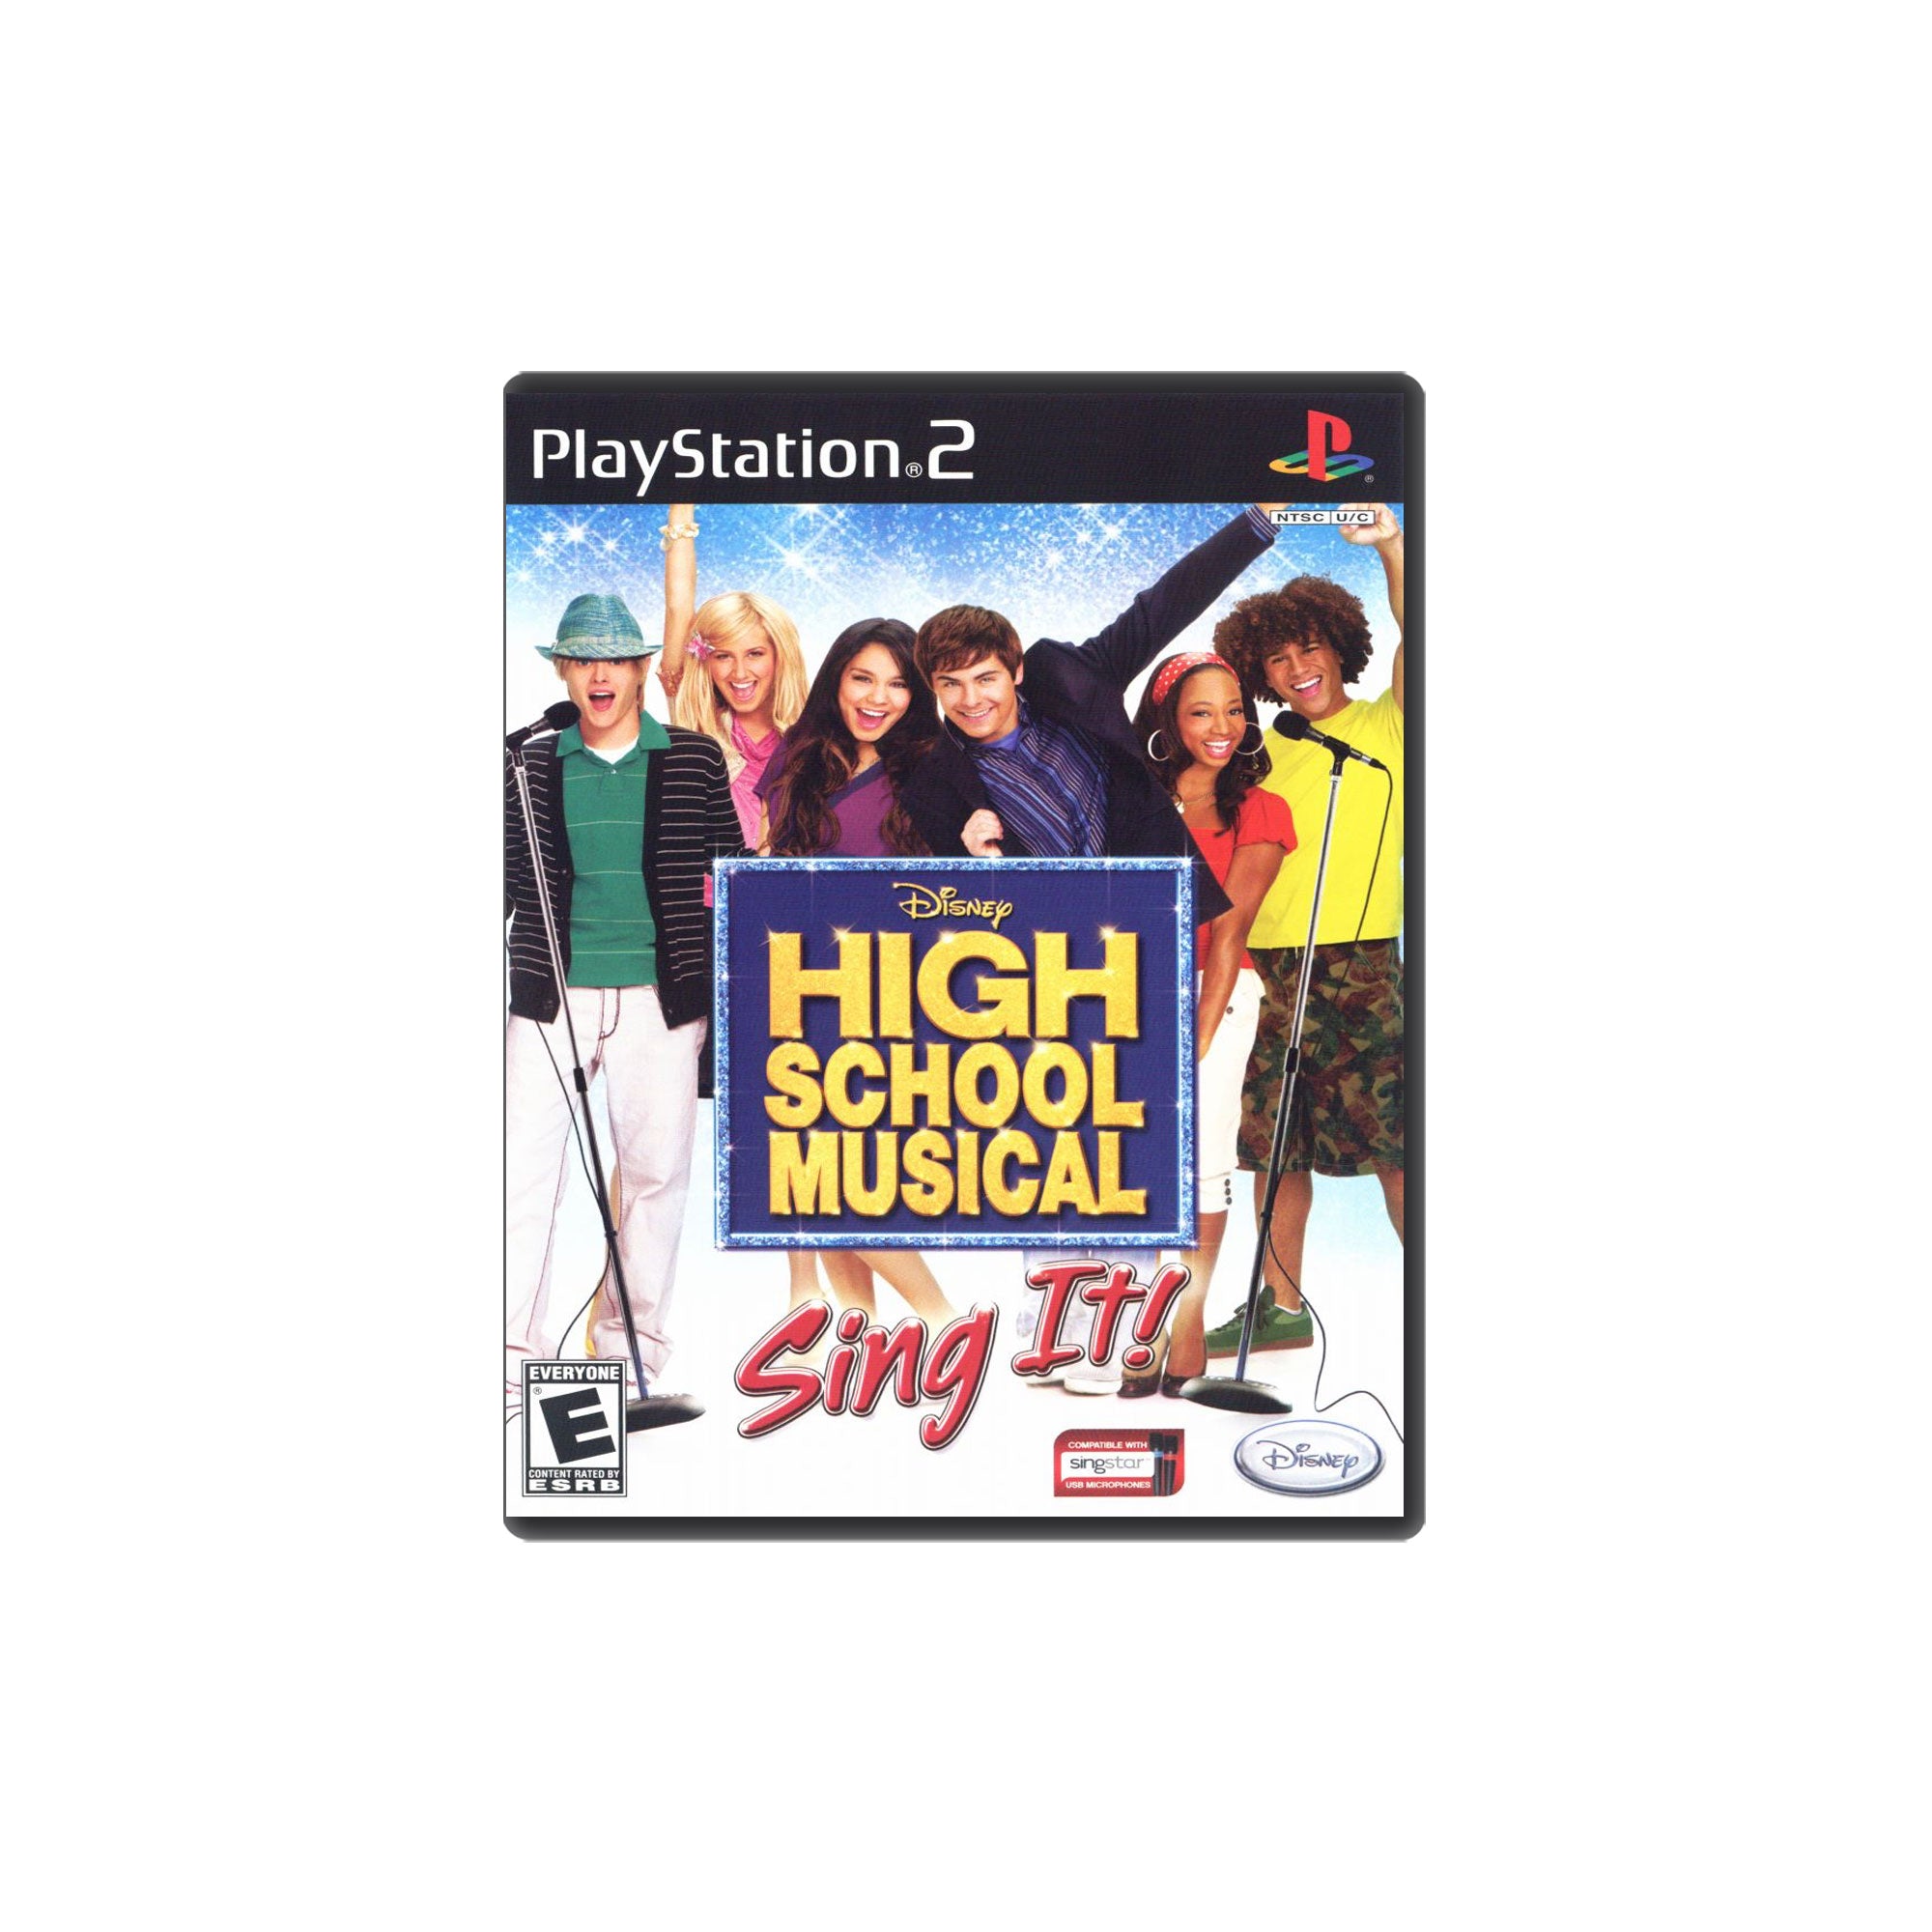 Swifty Games - High School Musical Sing It! (Playstation 2, 2007)